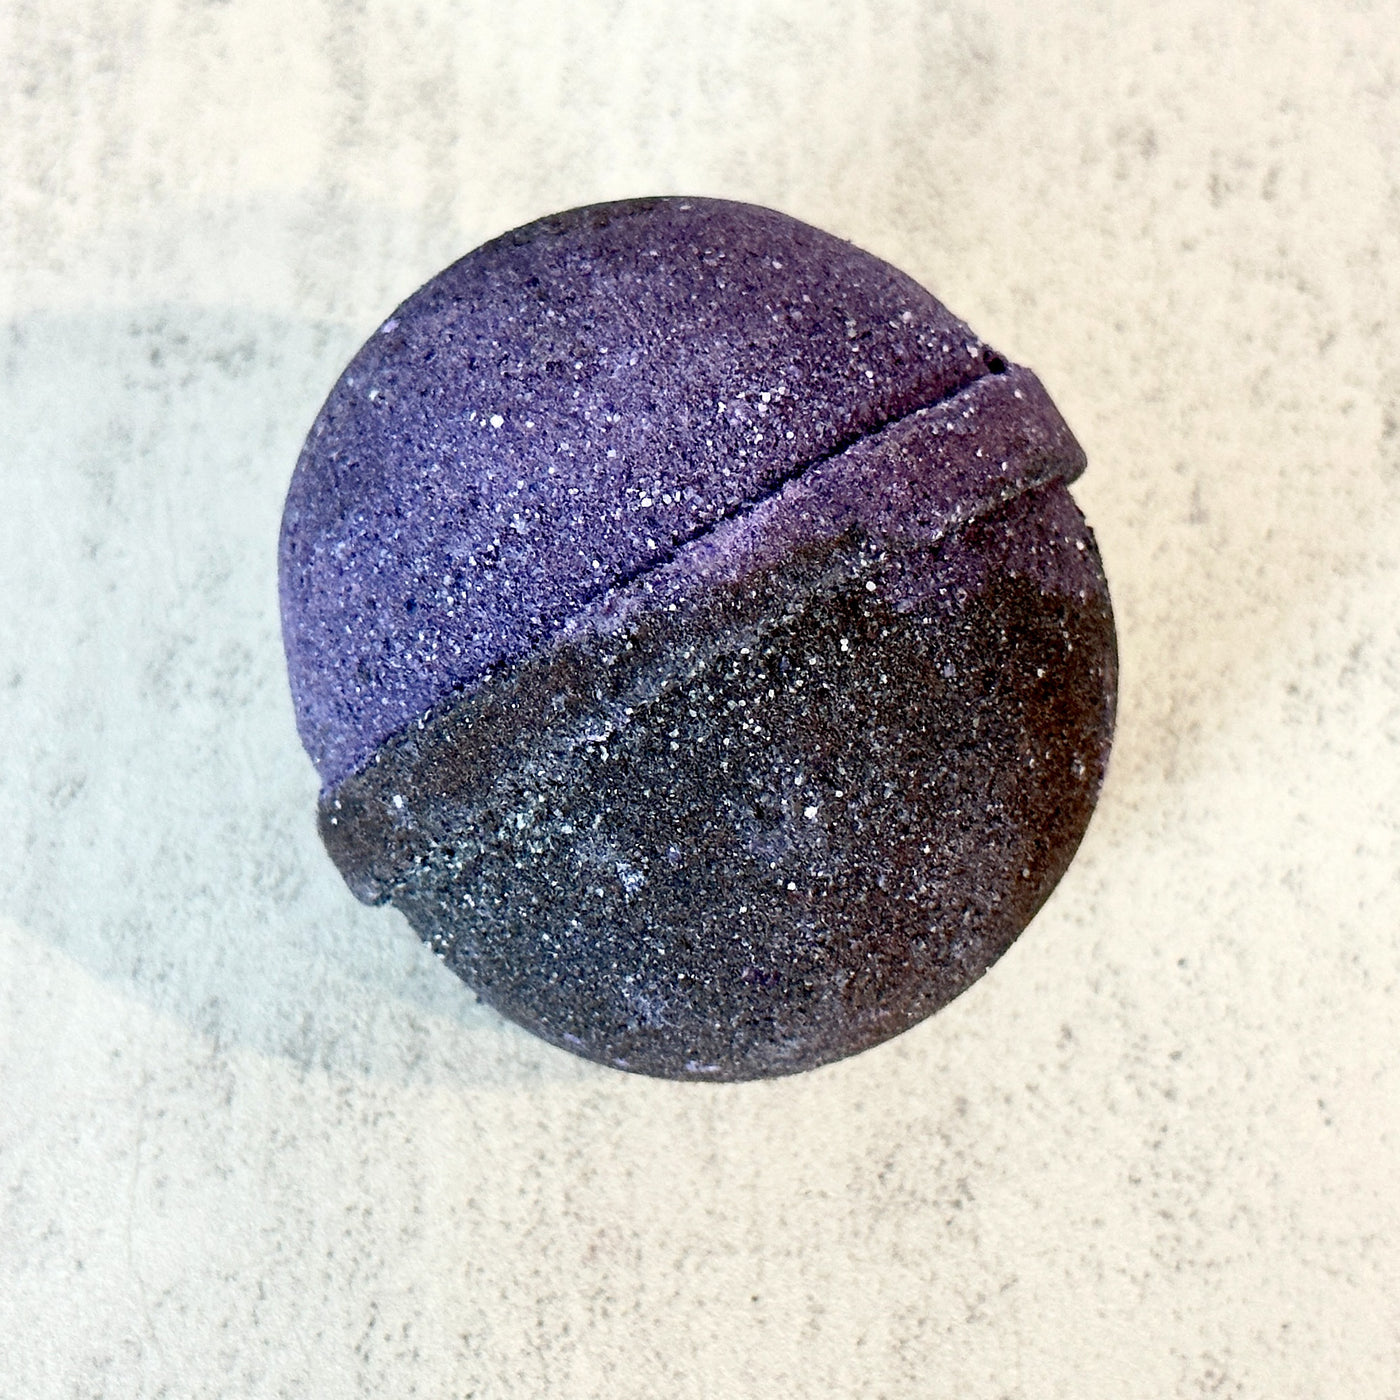 Purple and black Johnnie Ray Onyx bath bomb against concrete background.